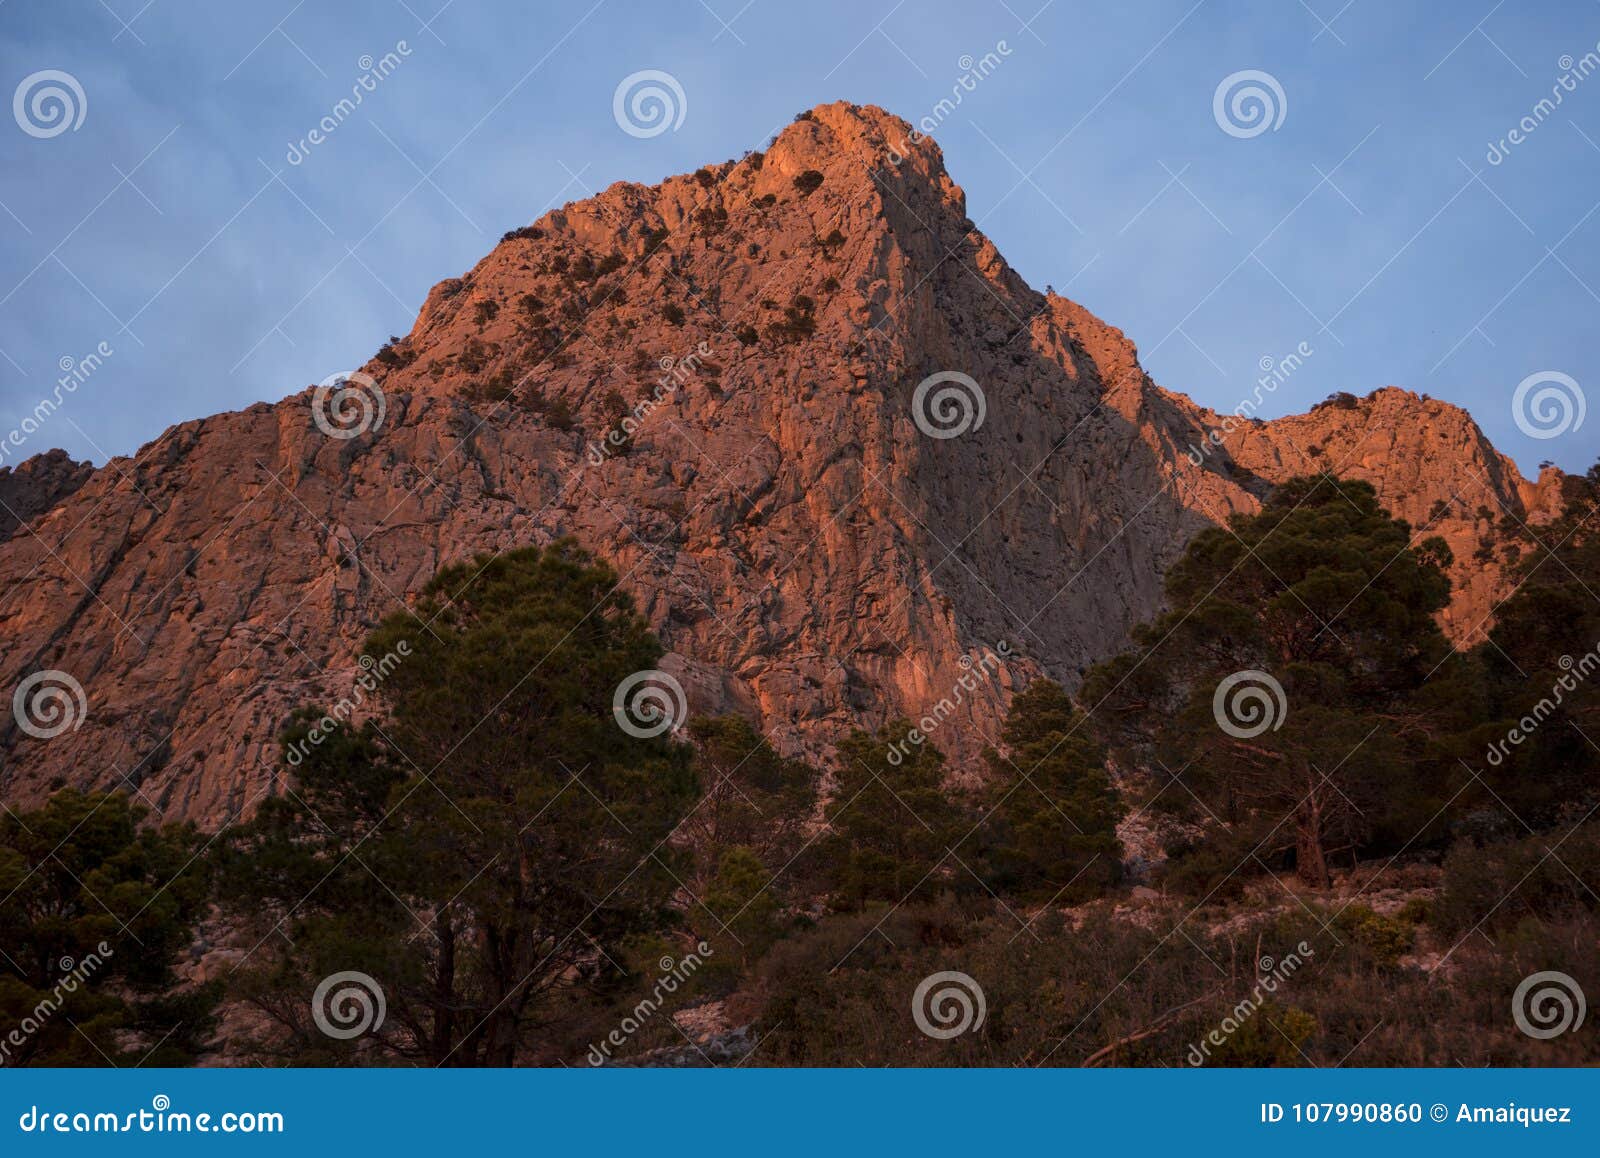 puig campana mountain